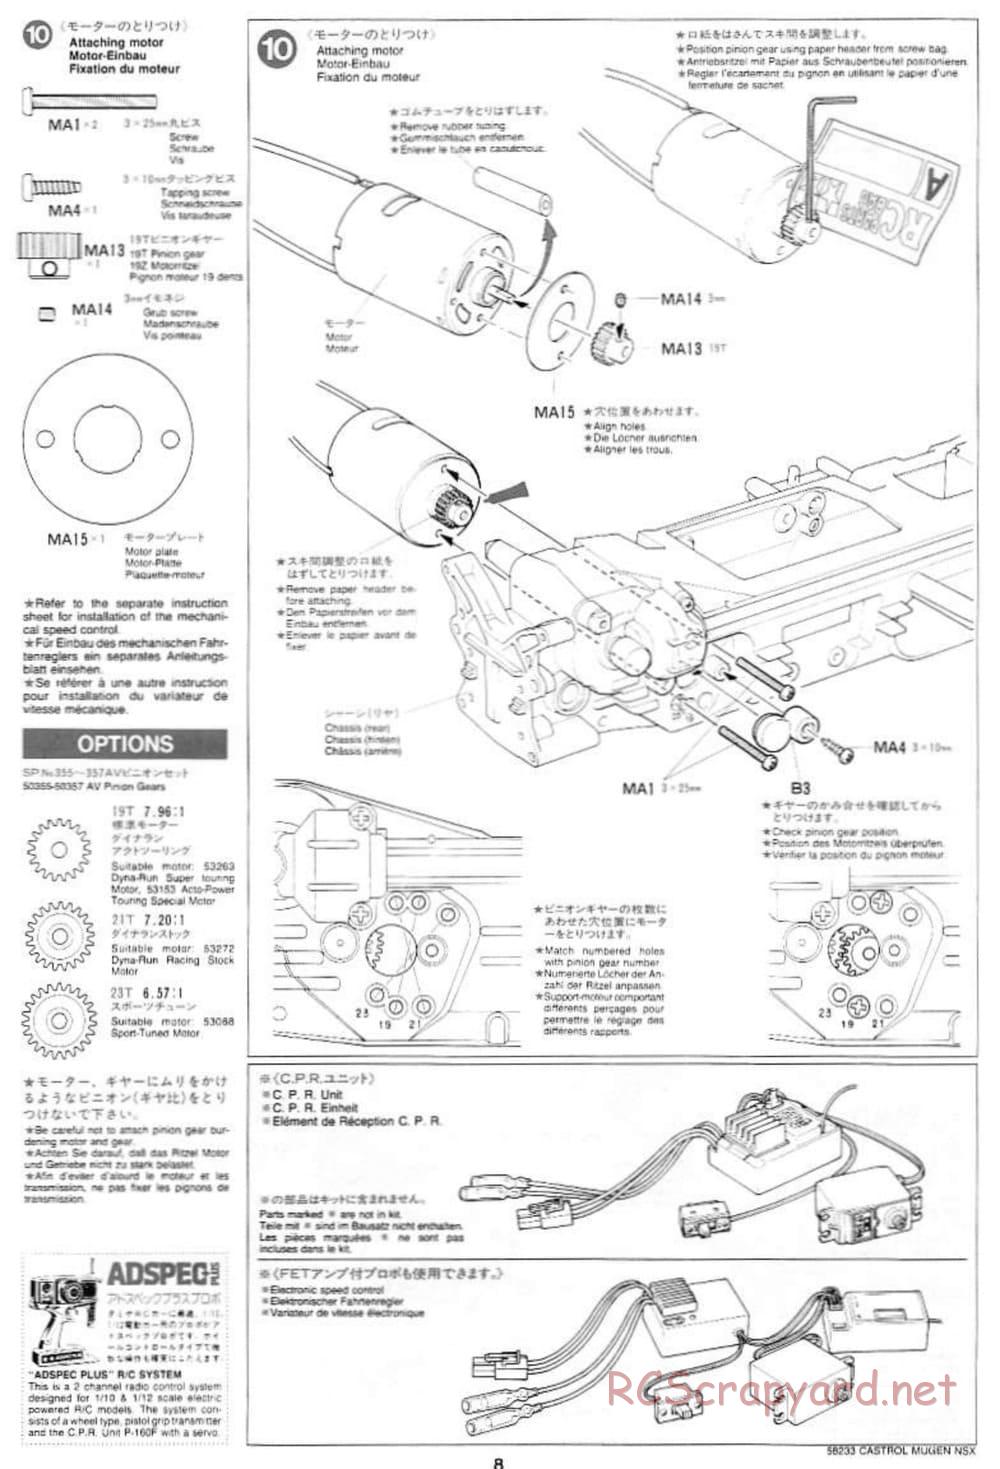 Tamiya - Castrol Mugen NSX - TL-01 Chassis - Manual - Page 8